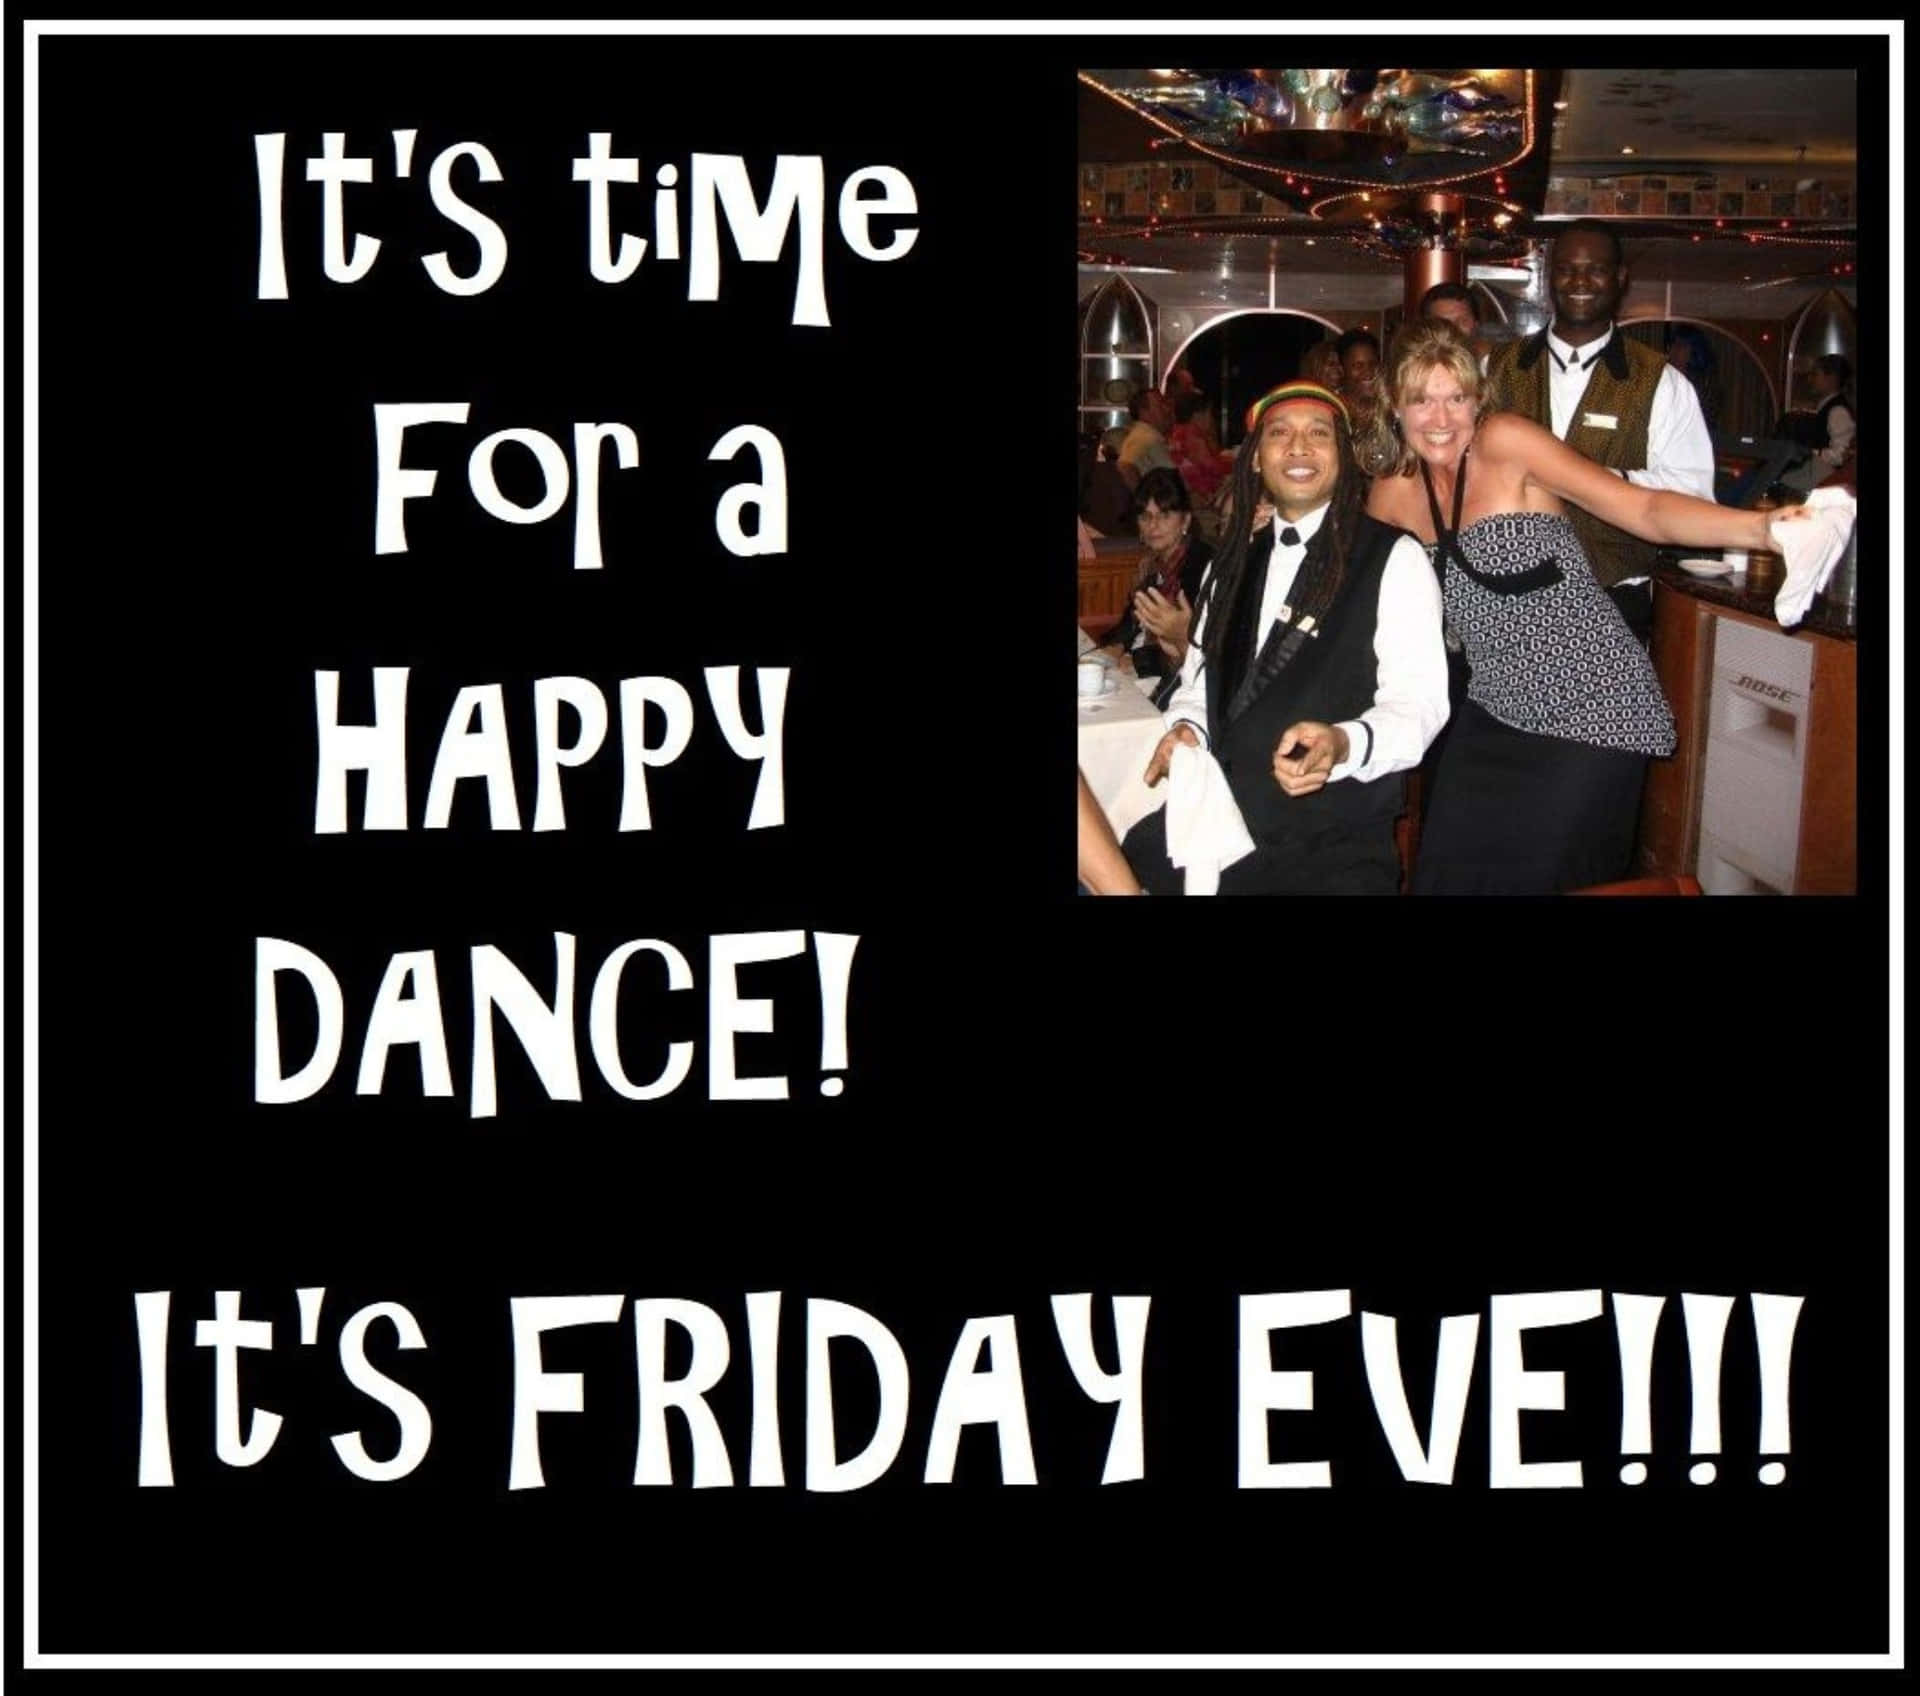 Happy Dance Friday Eve Wallpaper